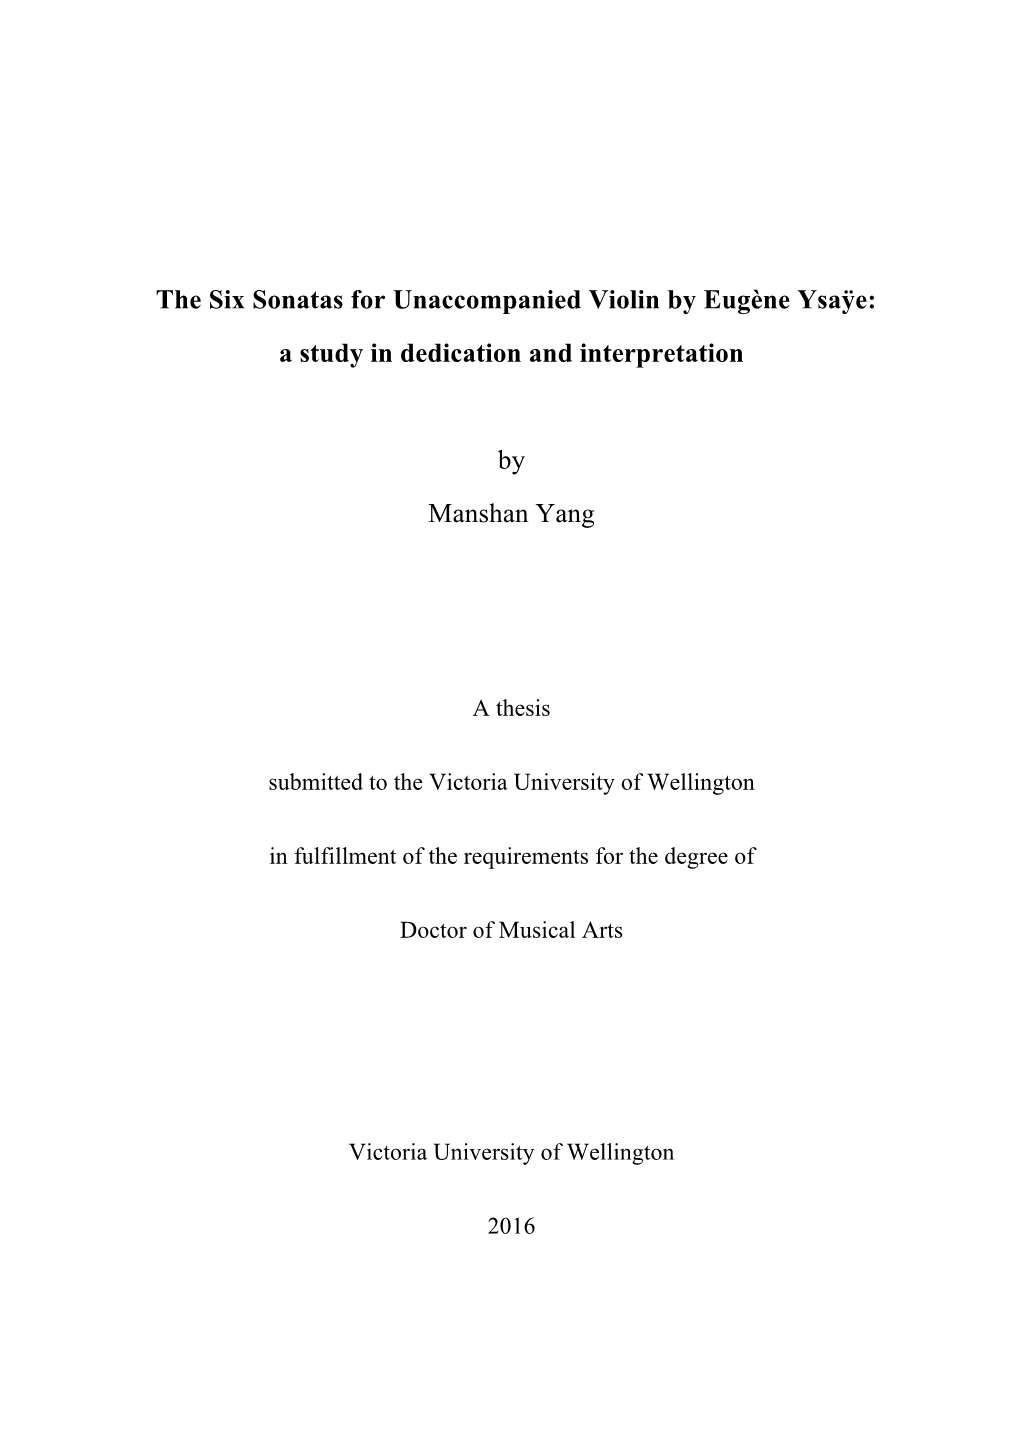 The Six Sonatas for Unaccompanied Violin by Eugène Ysaÿe: a Study in Dedication and Interpretation